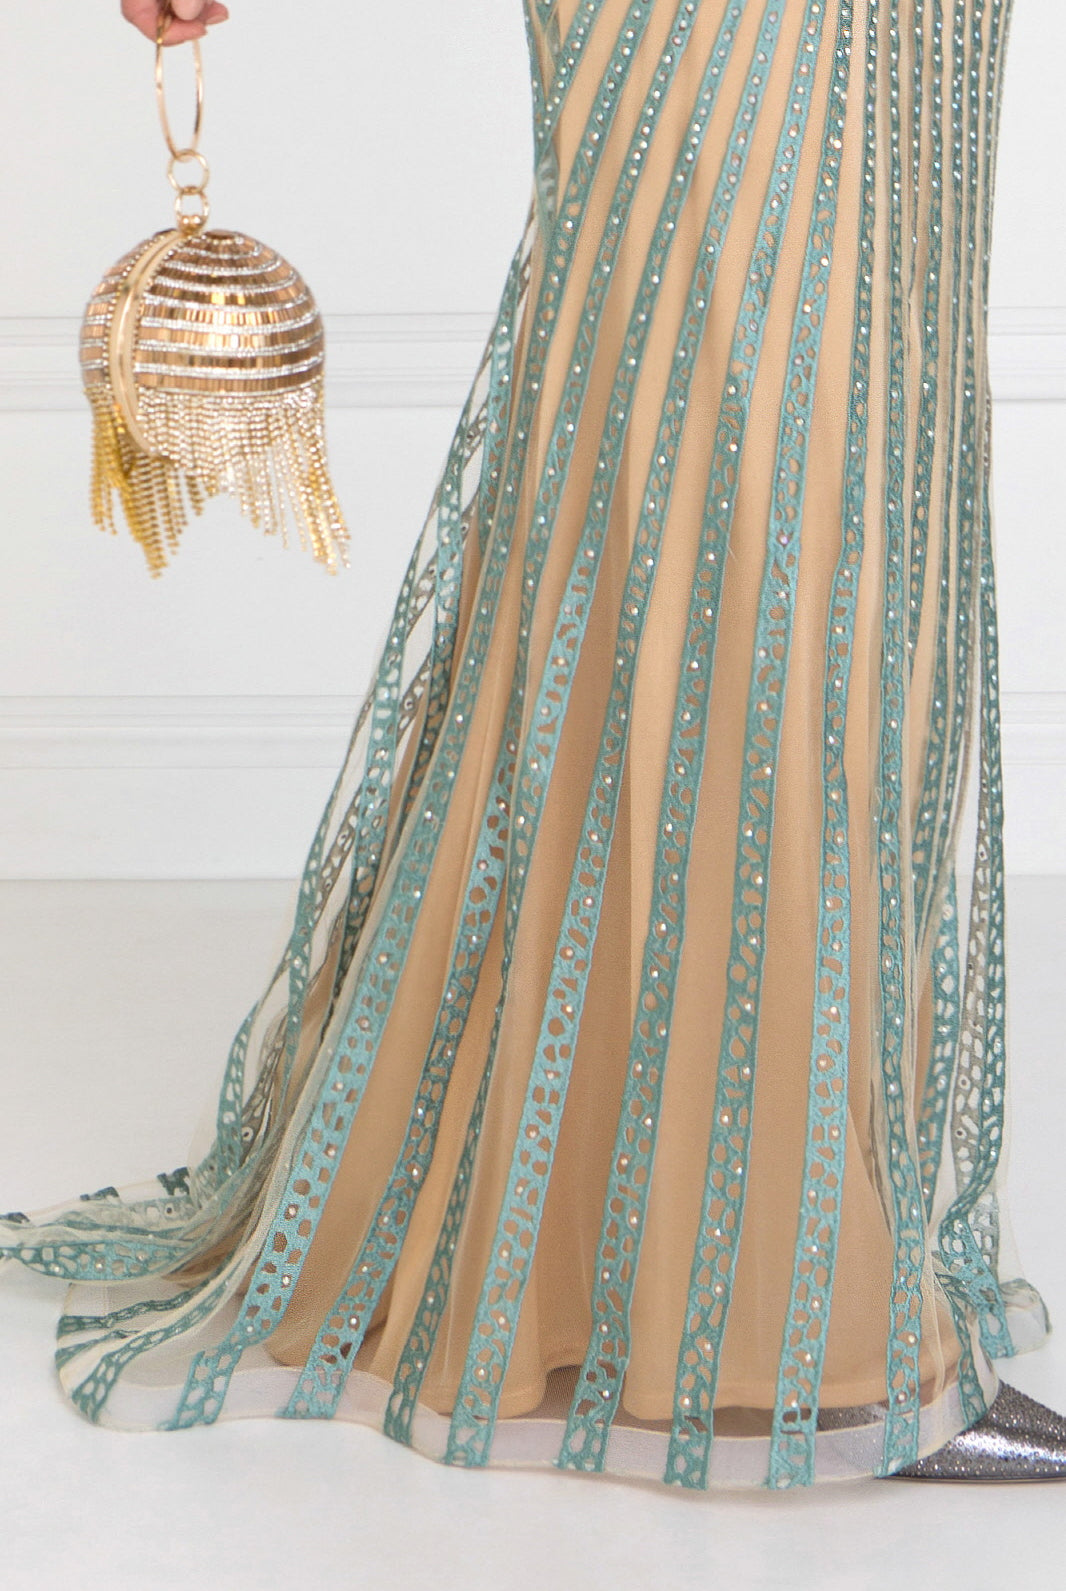 V-Neck Floor Length Dress with Rhinestone on Stripe-smcdress